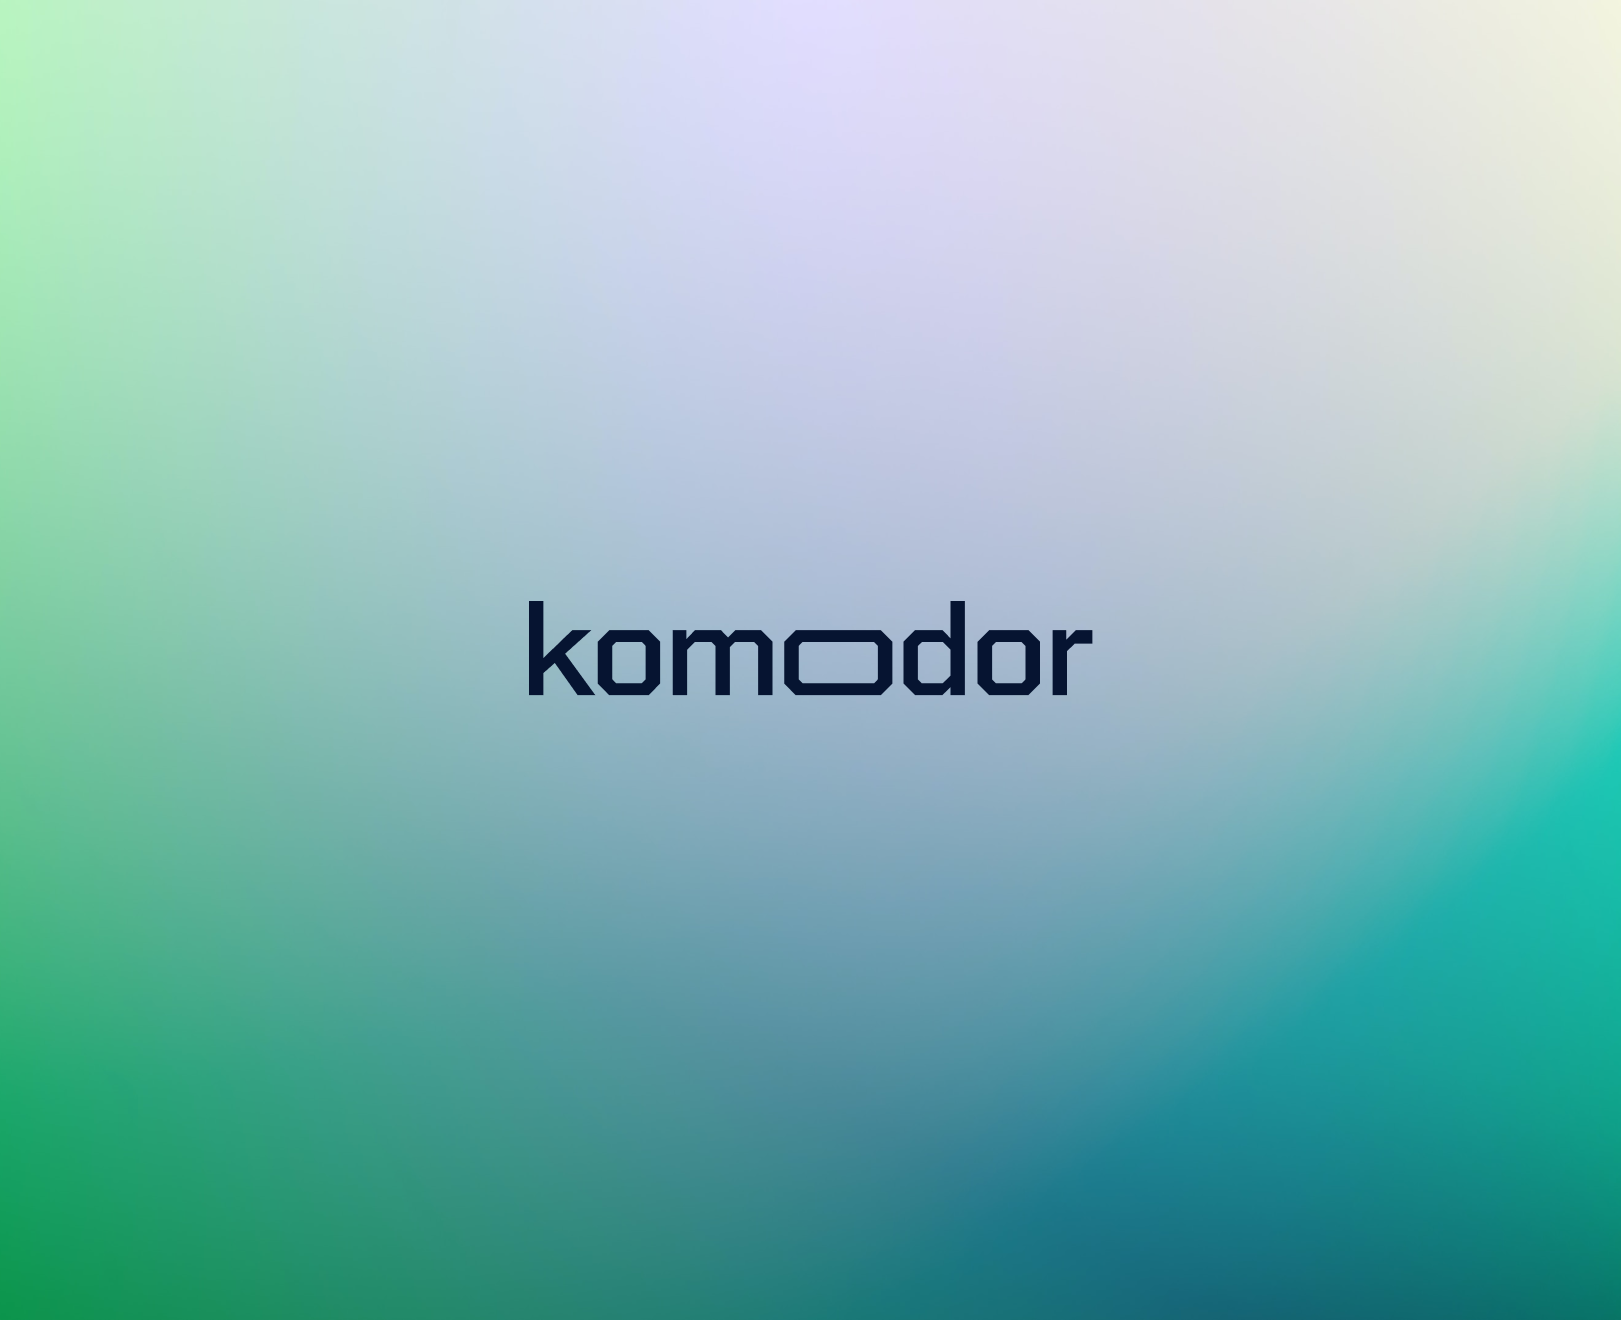 Is Komodor worth it?